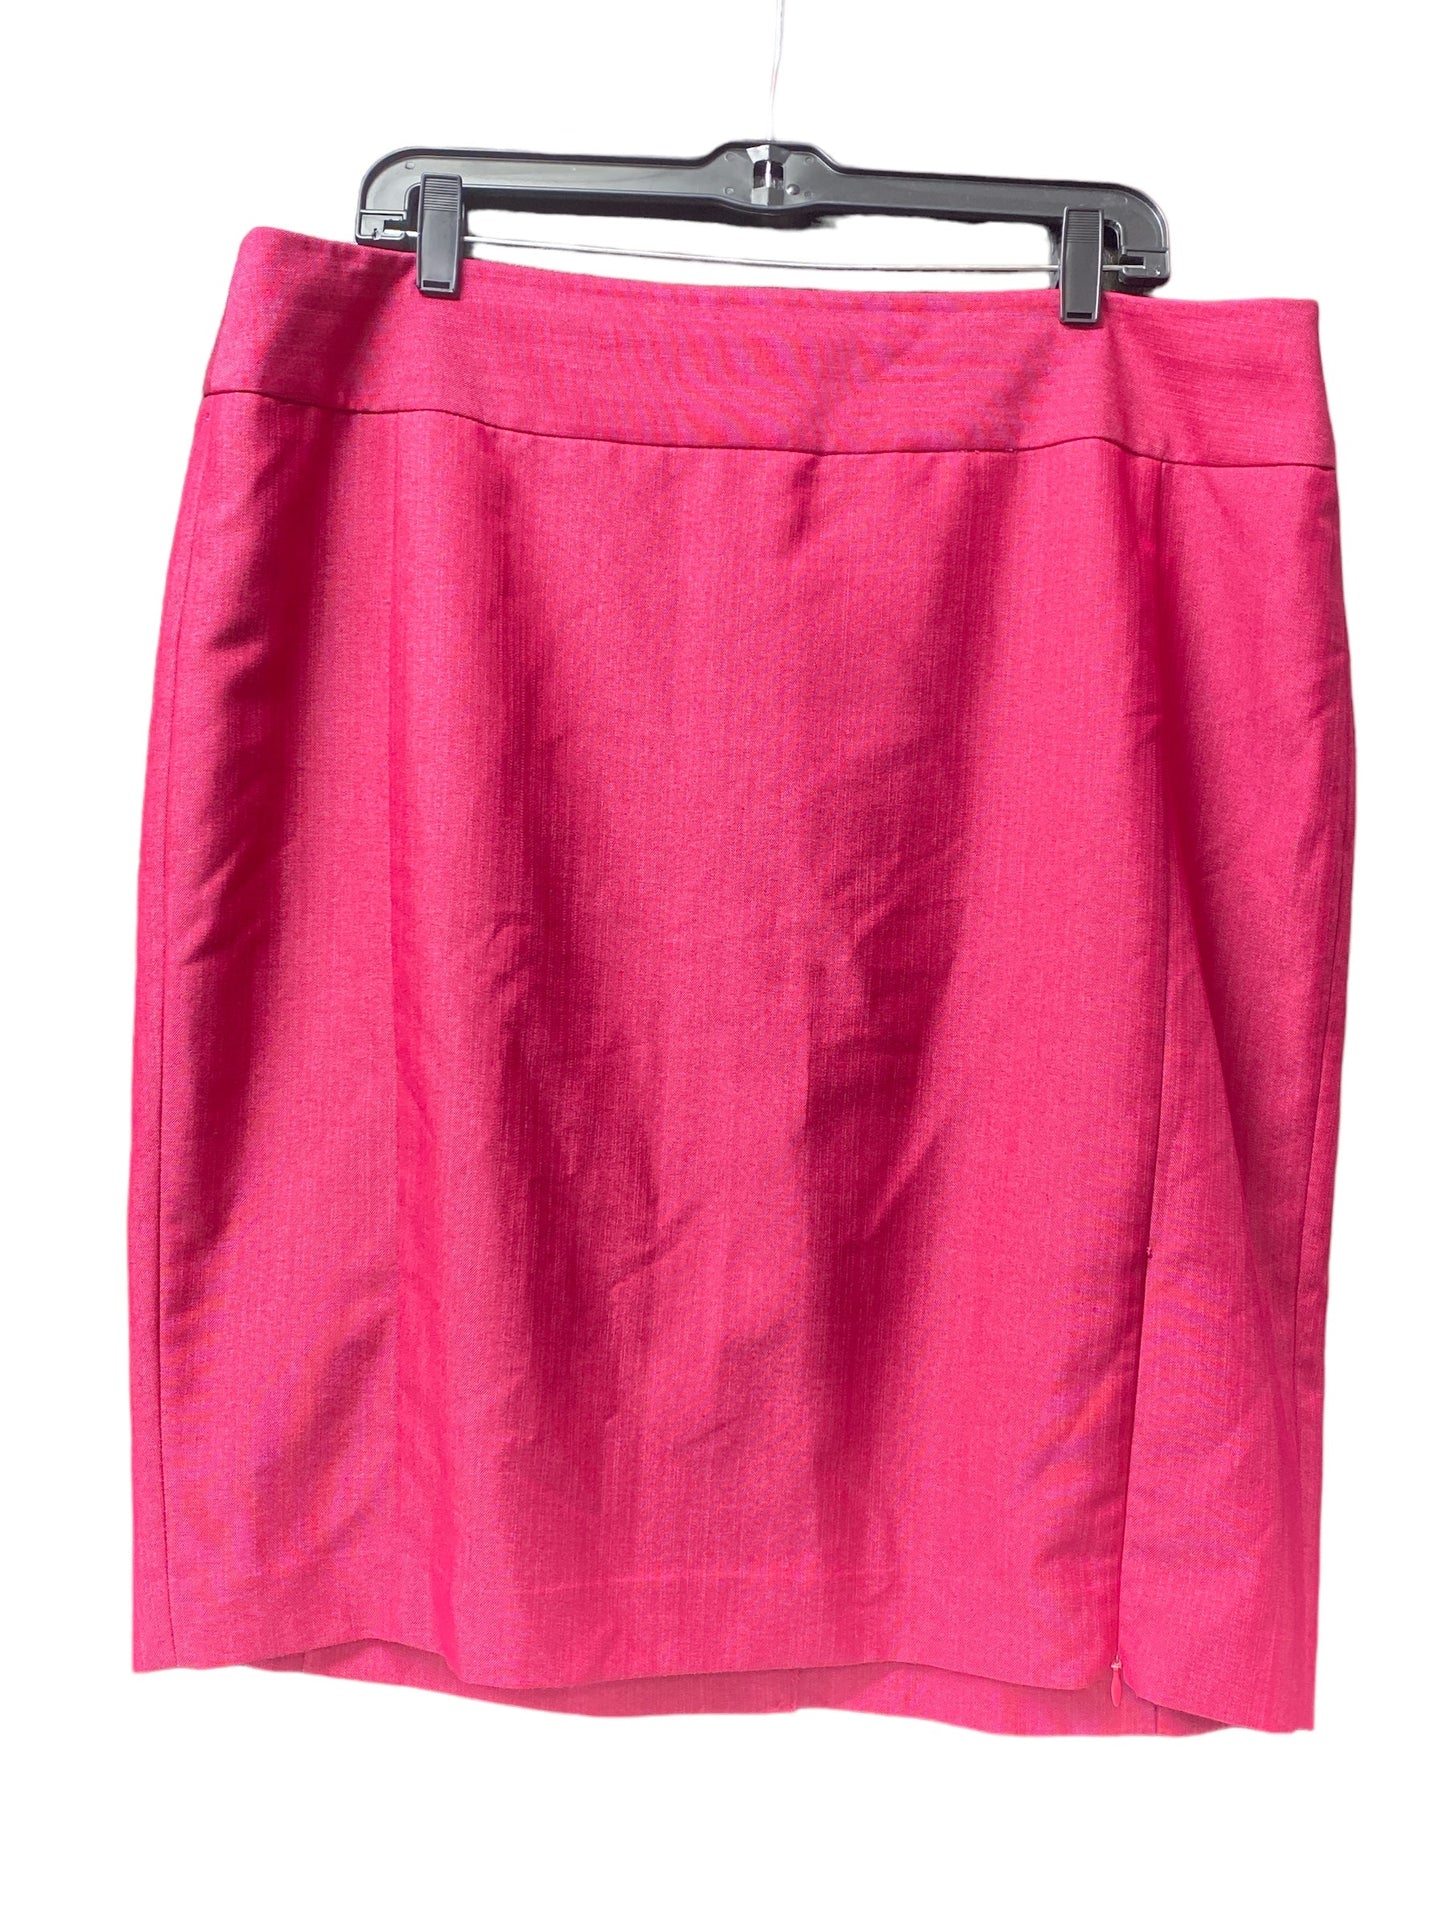 Skirt Midi By Eloquii  Size: Xl